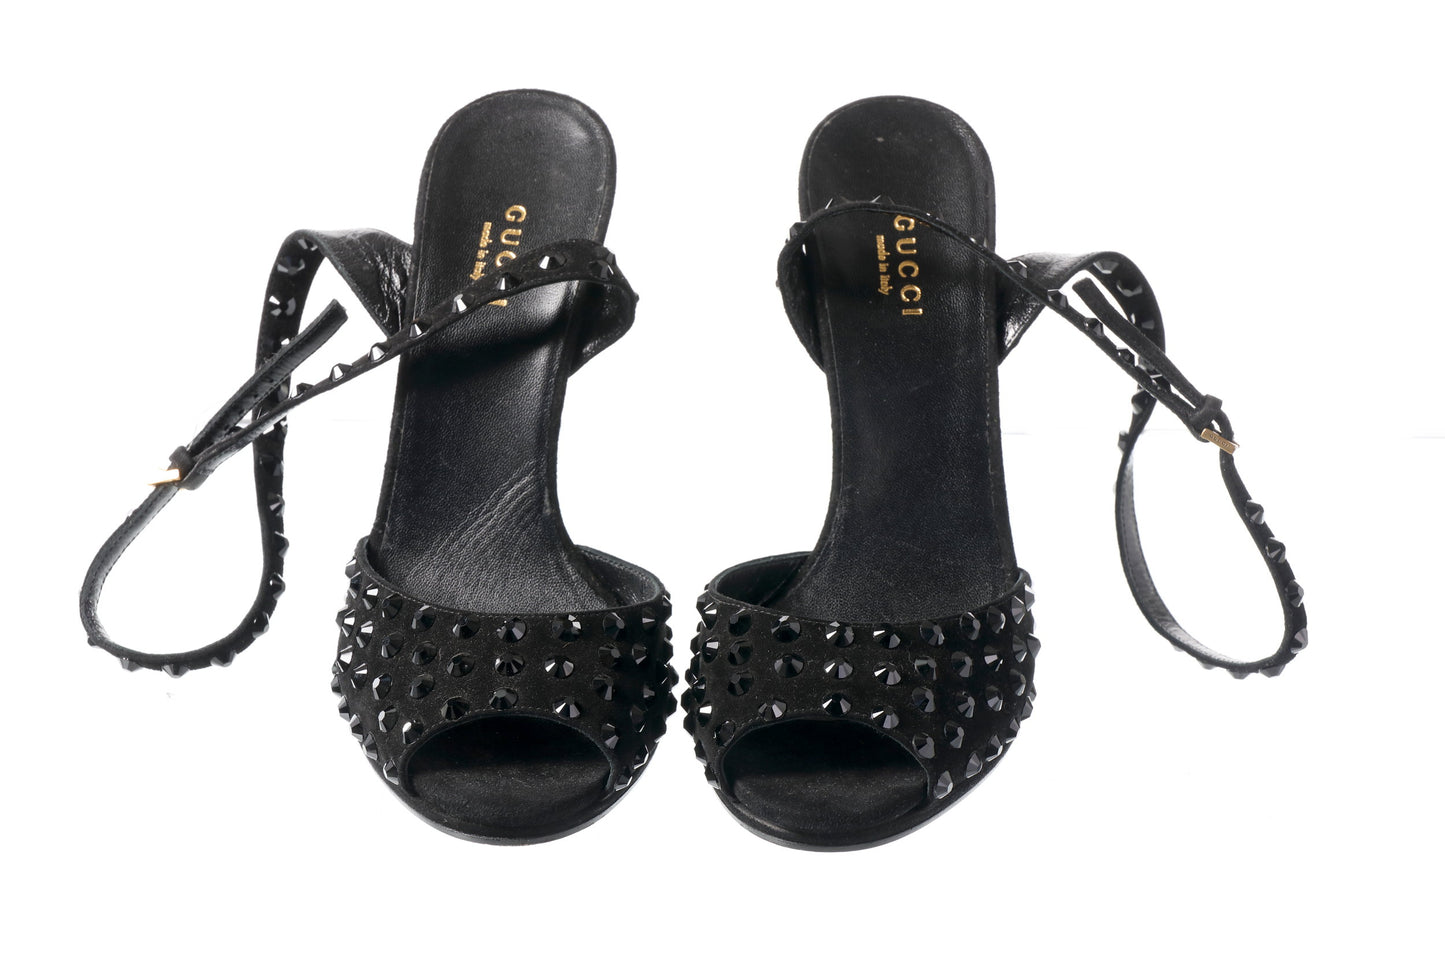 Sandalo Gucci vintage in camoscio nero